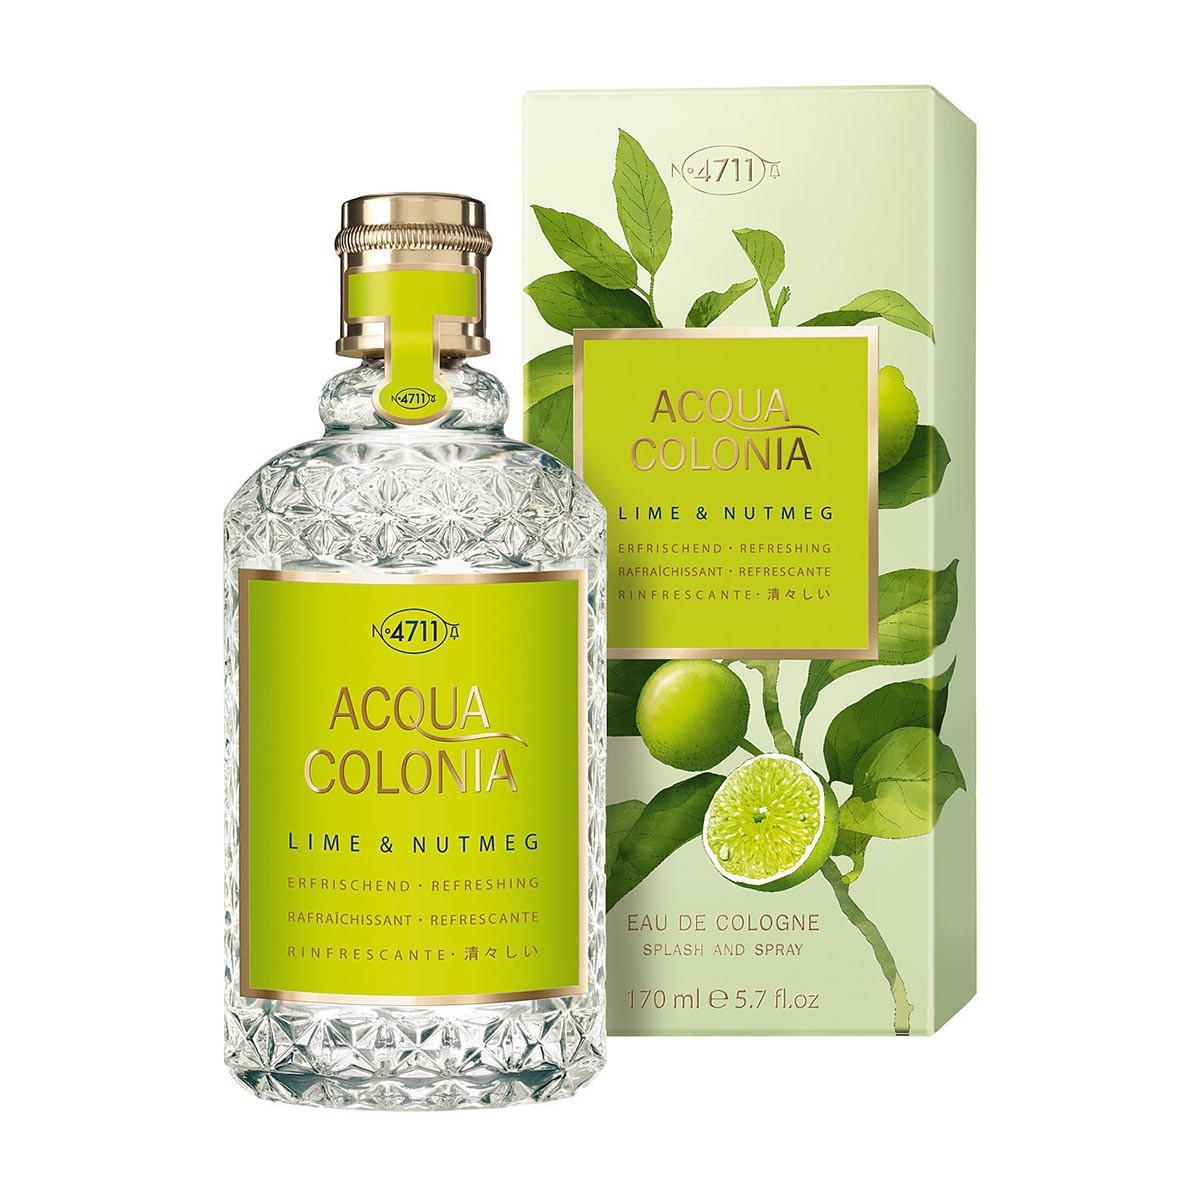 4711-fragrances-parfym-acqua-colonia-lime-nutmeg-natural-spray-eau-de-cologne-170ml